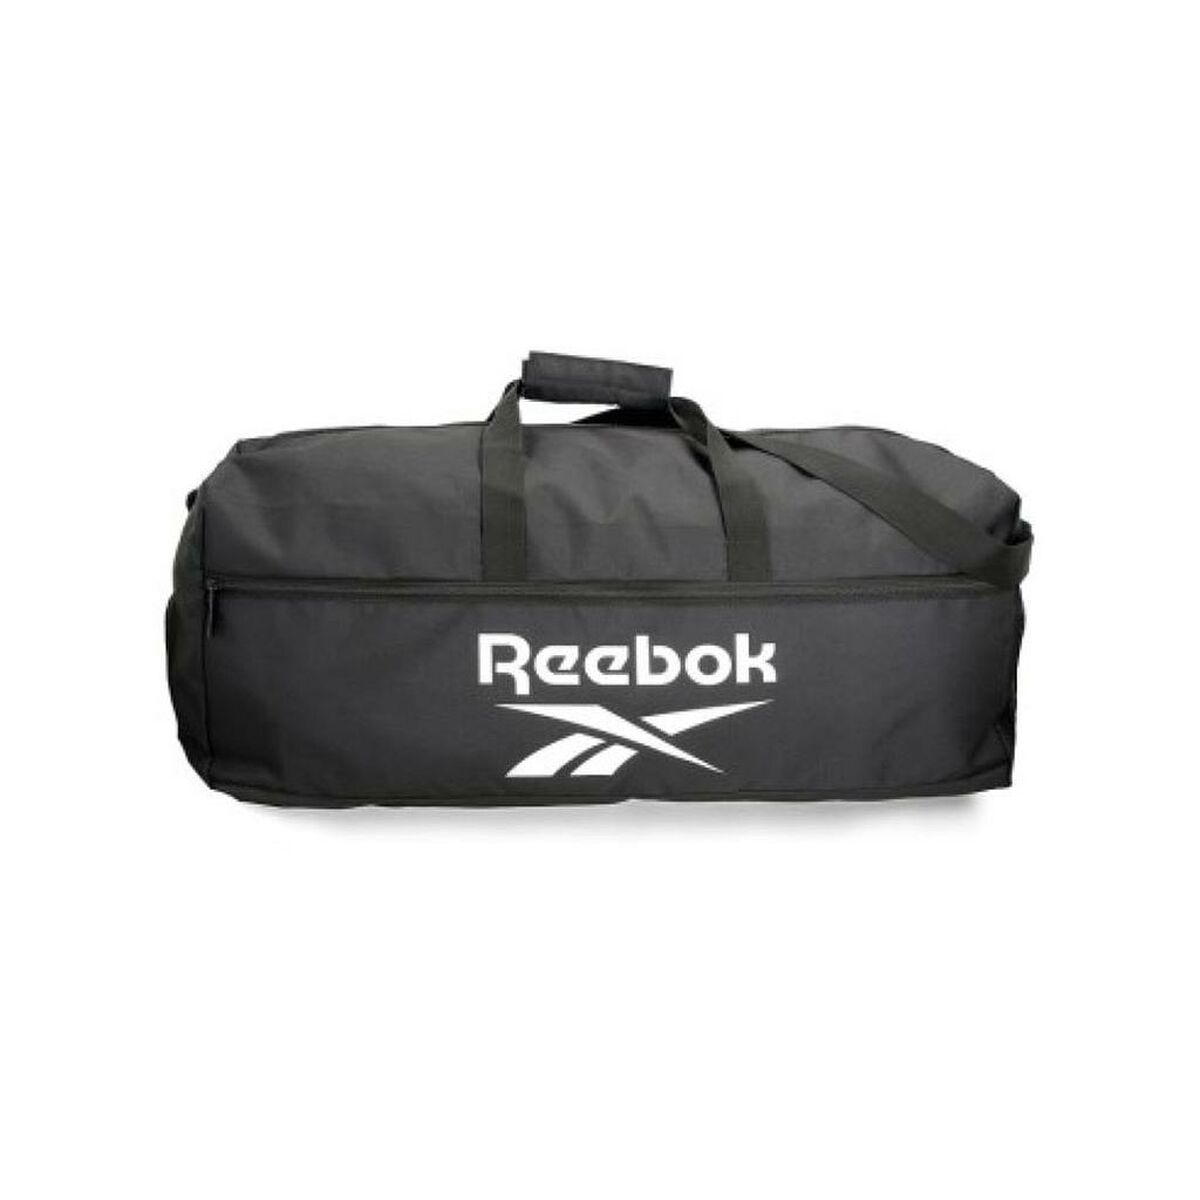 Sports bag Reebok ASHLAND 8023631 Black One size